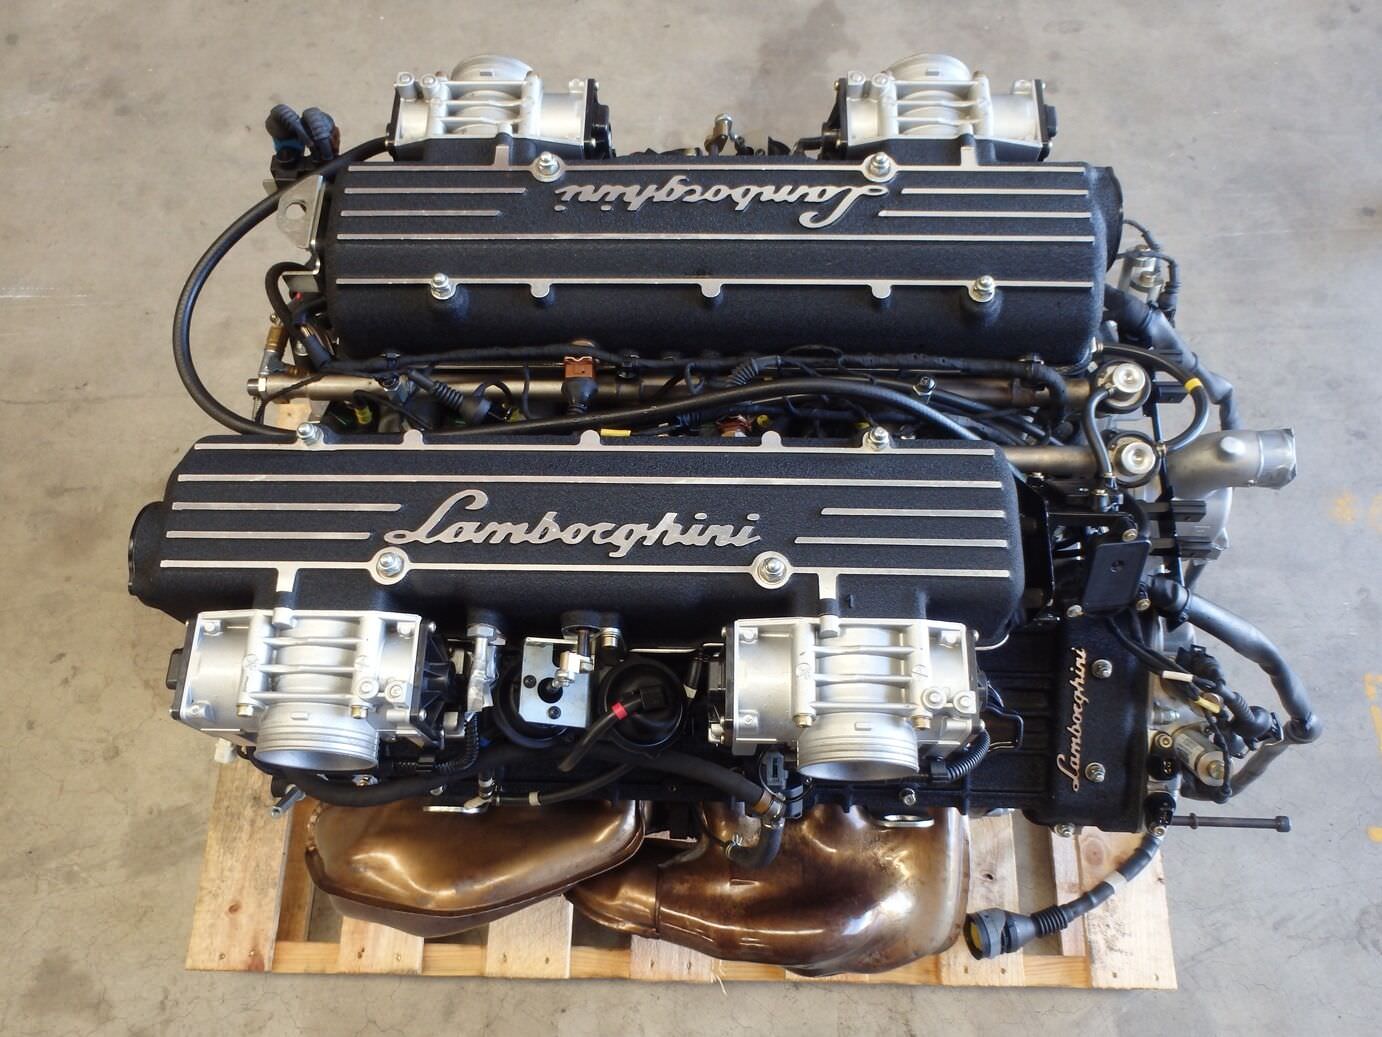 6.2-litre Lamborghini Murcielago V12 engine